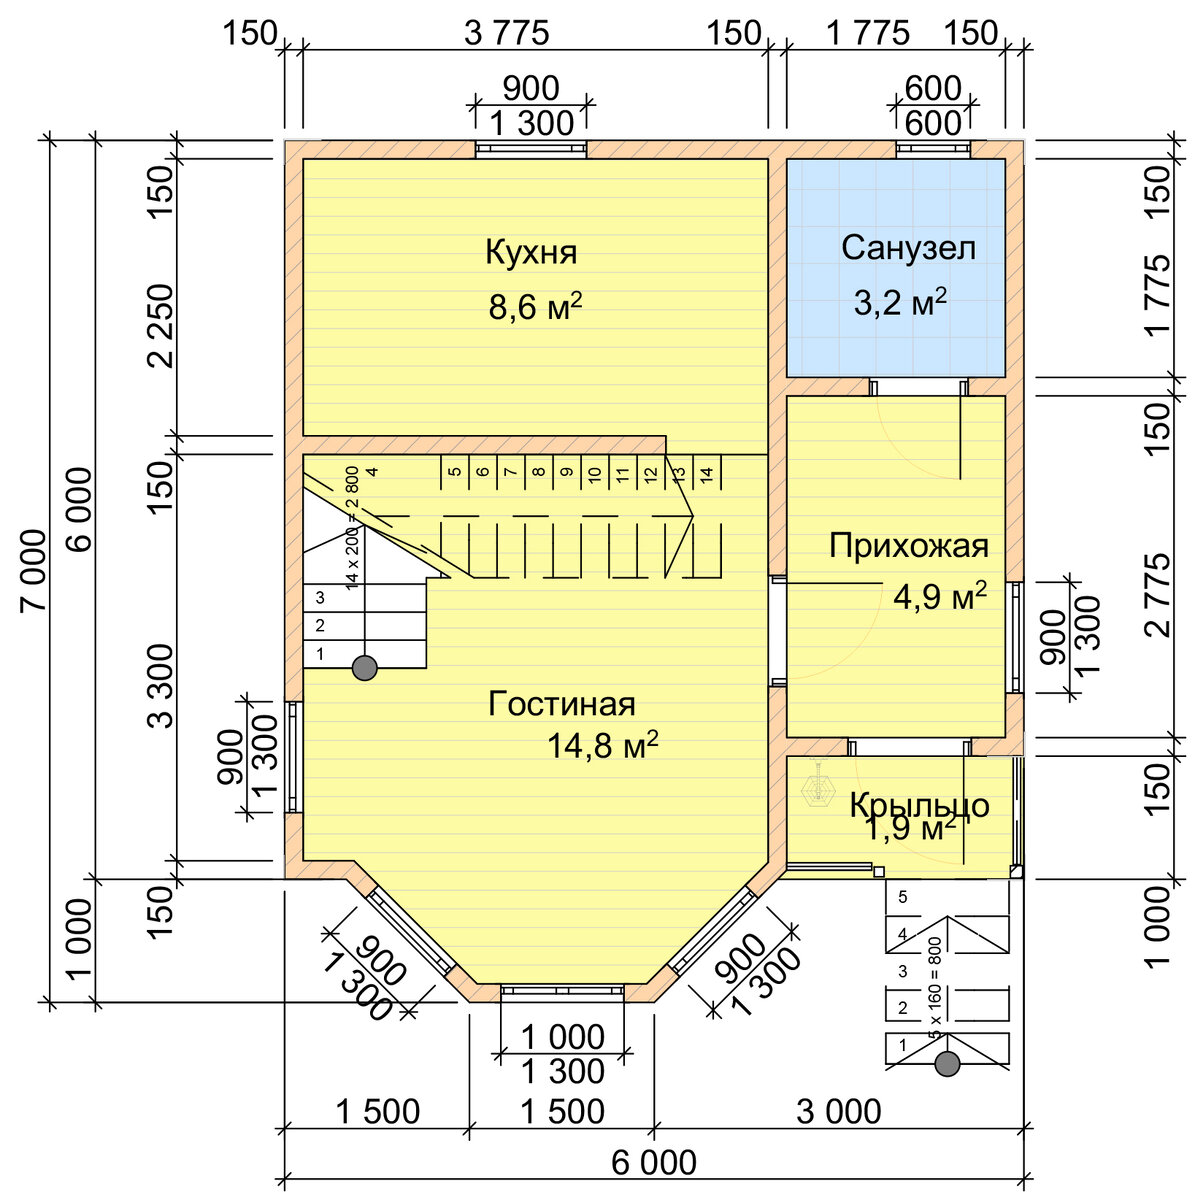 3-х комнатный дом 6х7 м. для сада и дачи, с мансардой, площадью 61 м² (+ Планы и фасады с размерами) ??